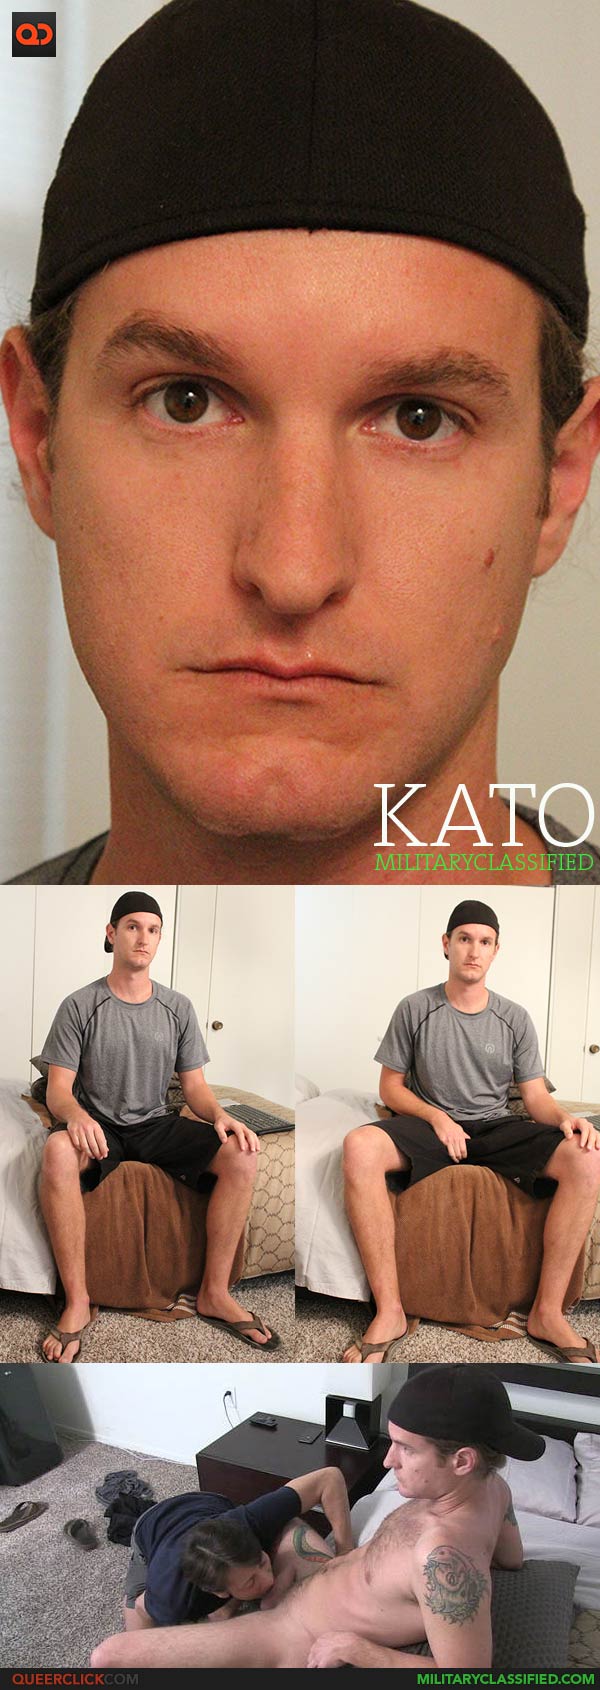 Military Classified: Kato